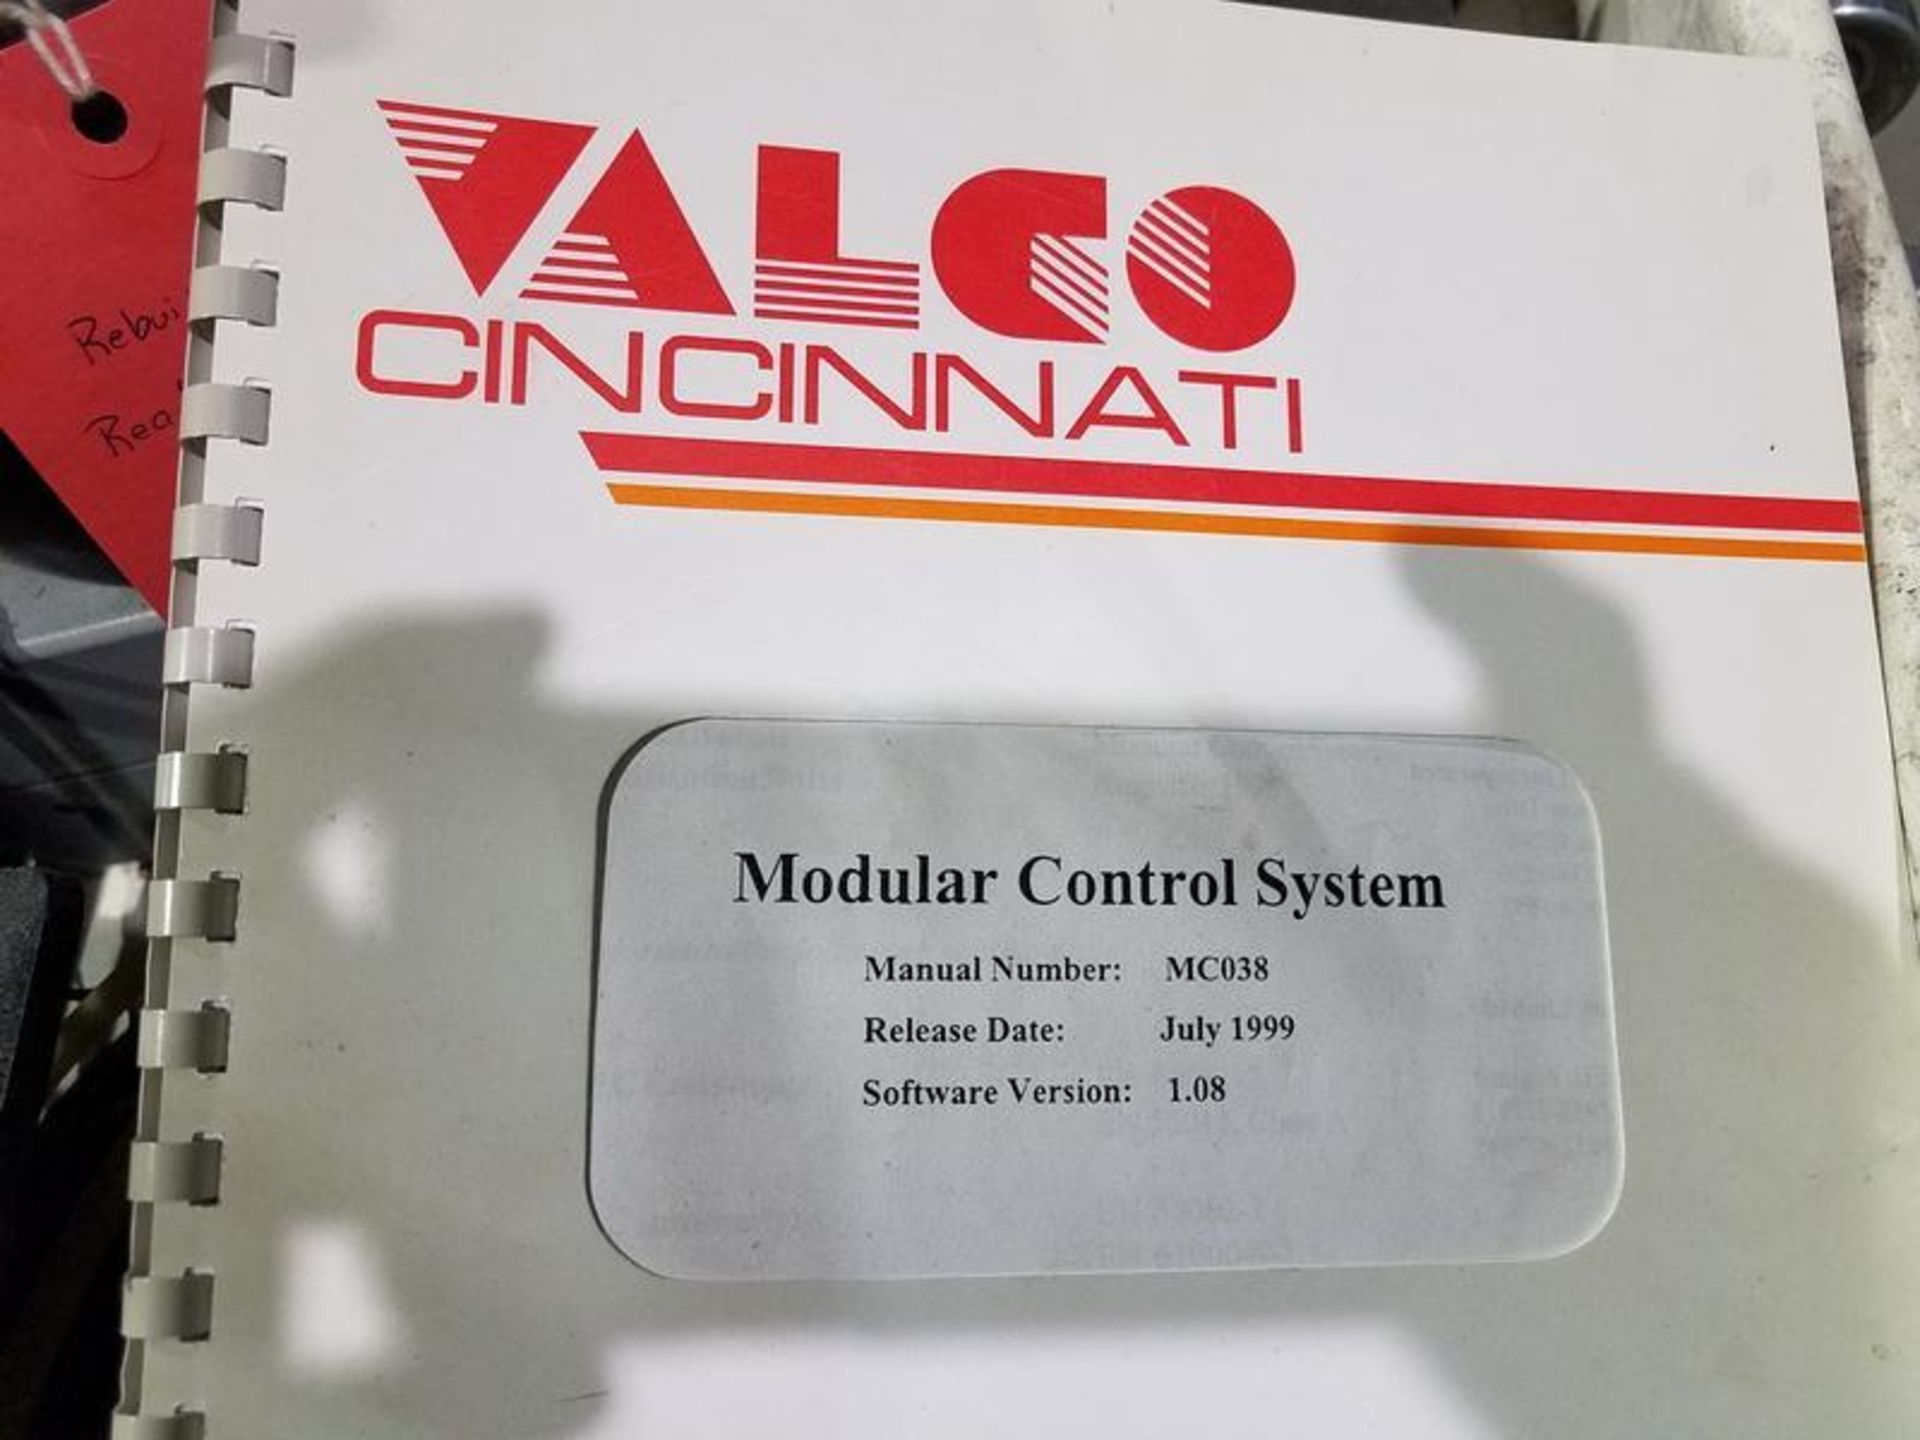 Valco Cincinnati Modular Control System - Image 6 of 6